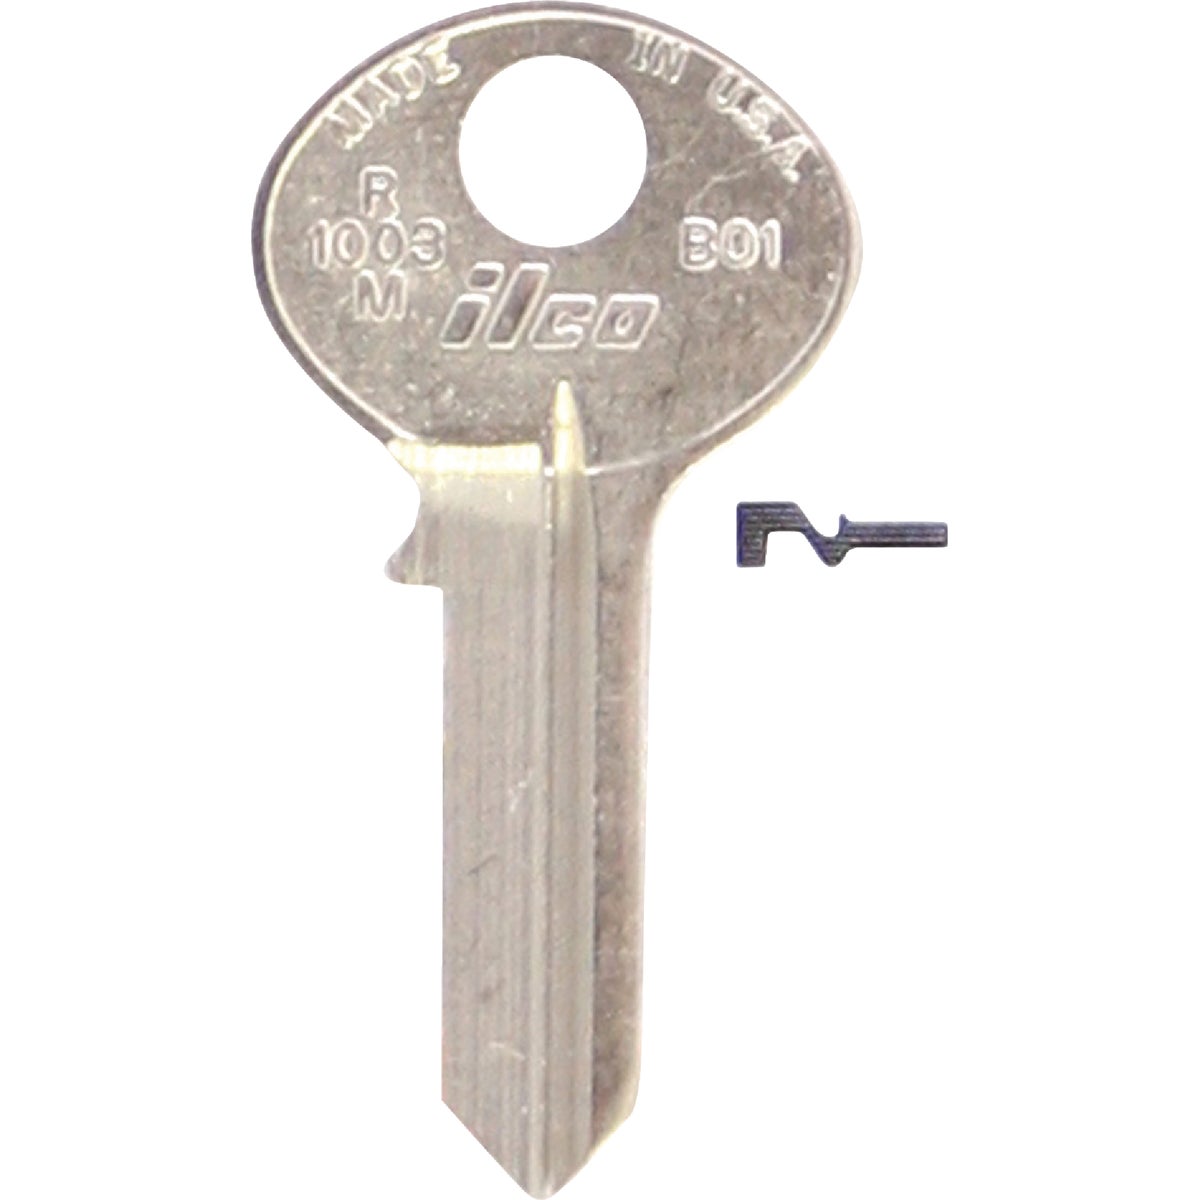 Bilco Bommer Nickel Plated Mailbox Key, R1003M (10-Pack)